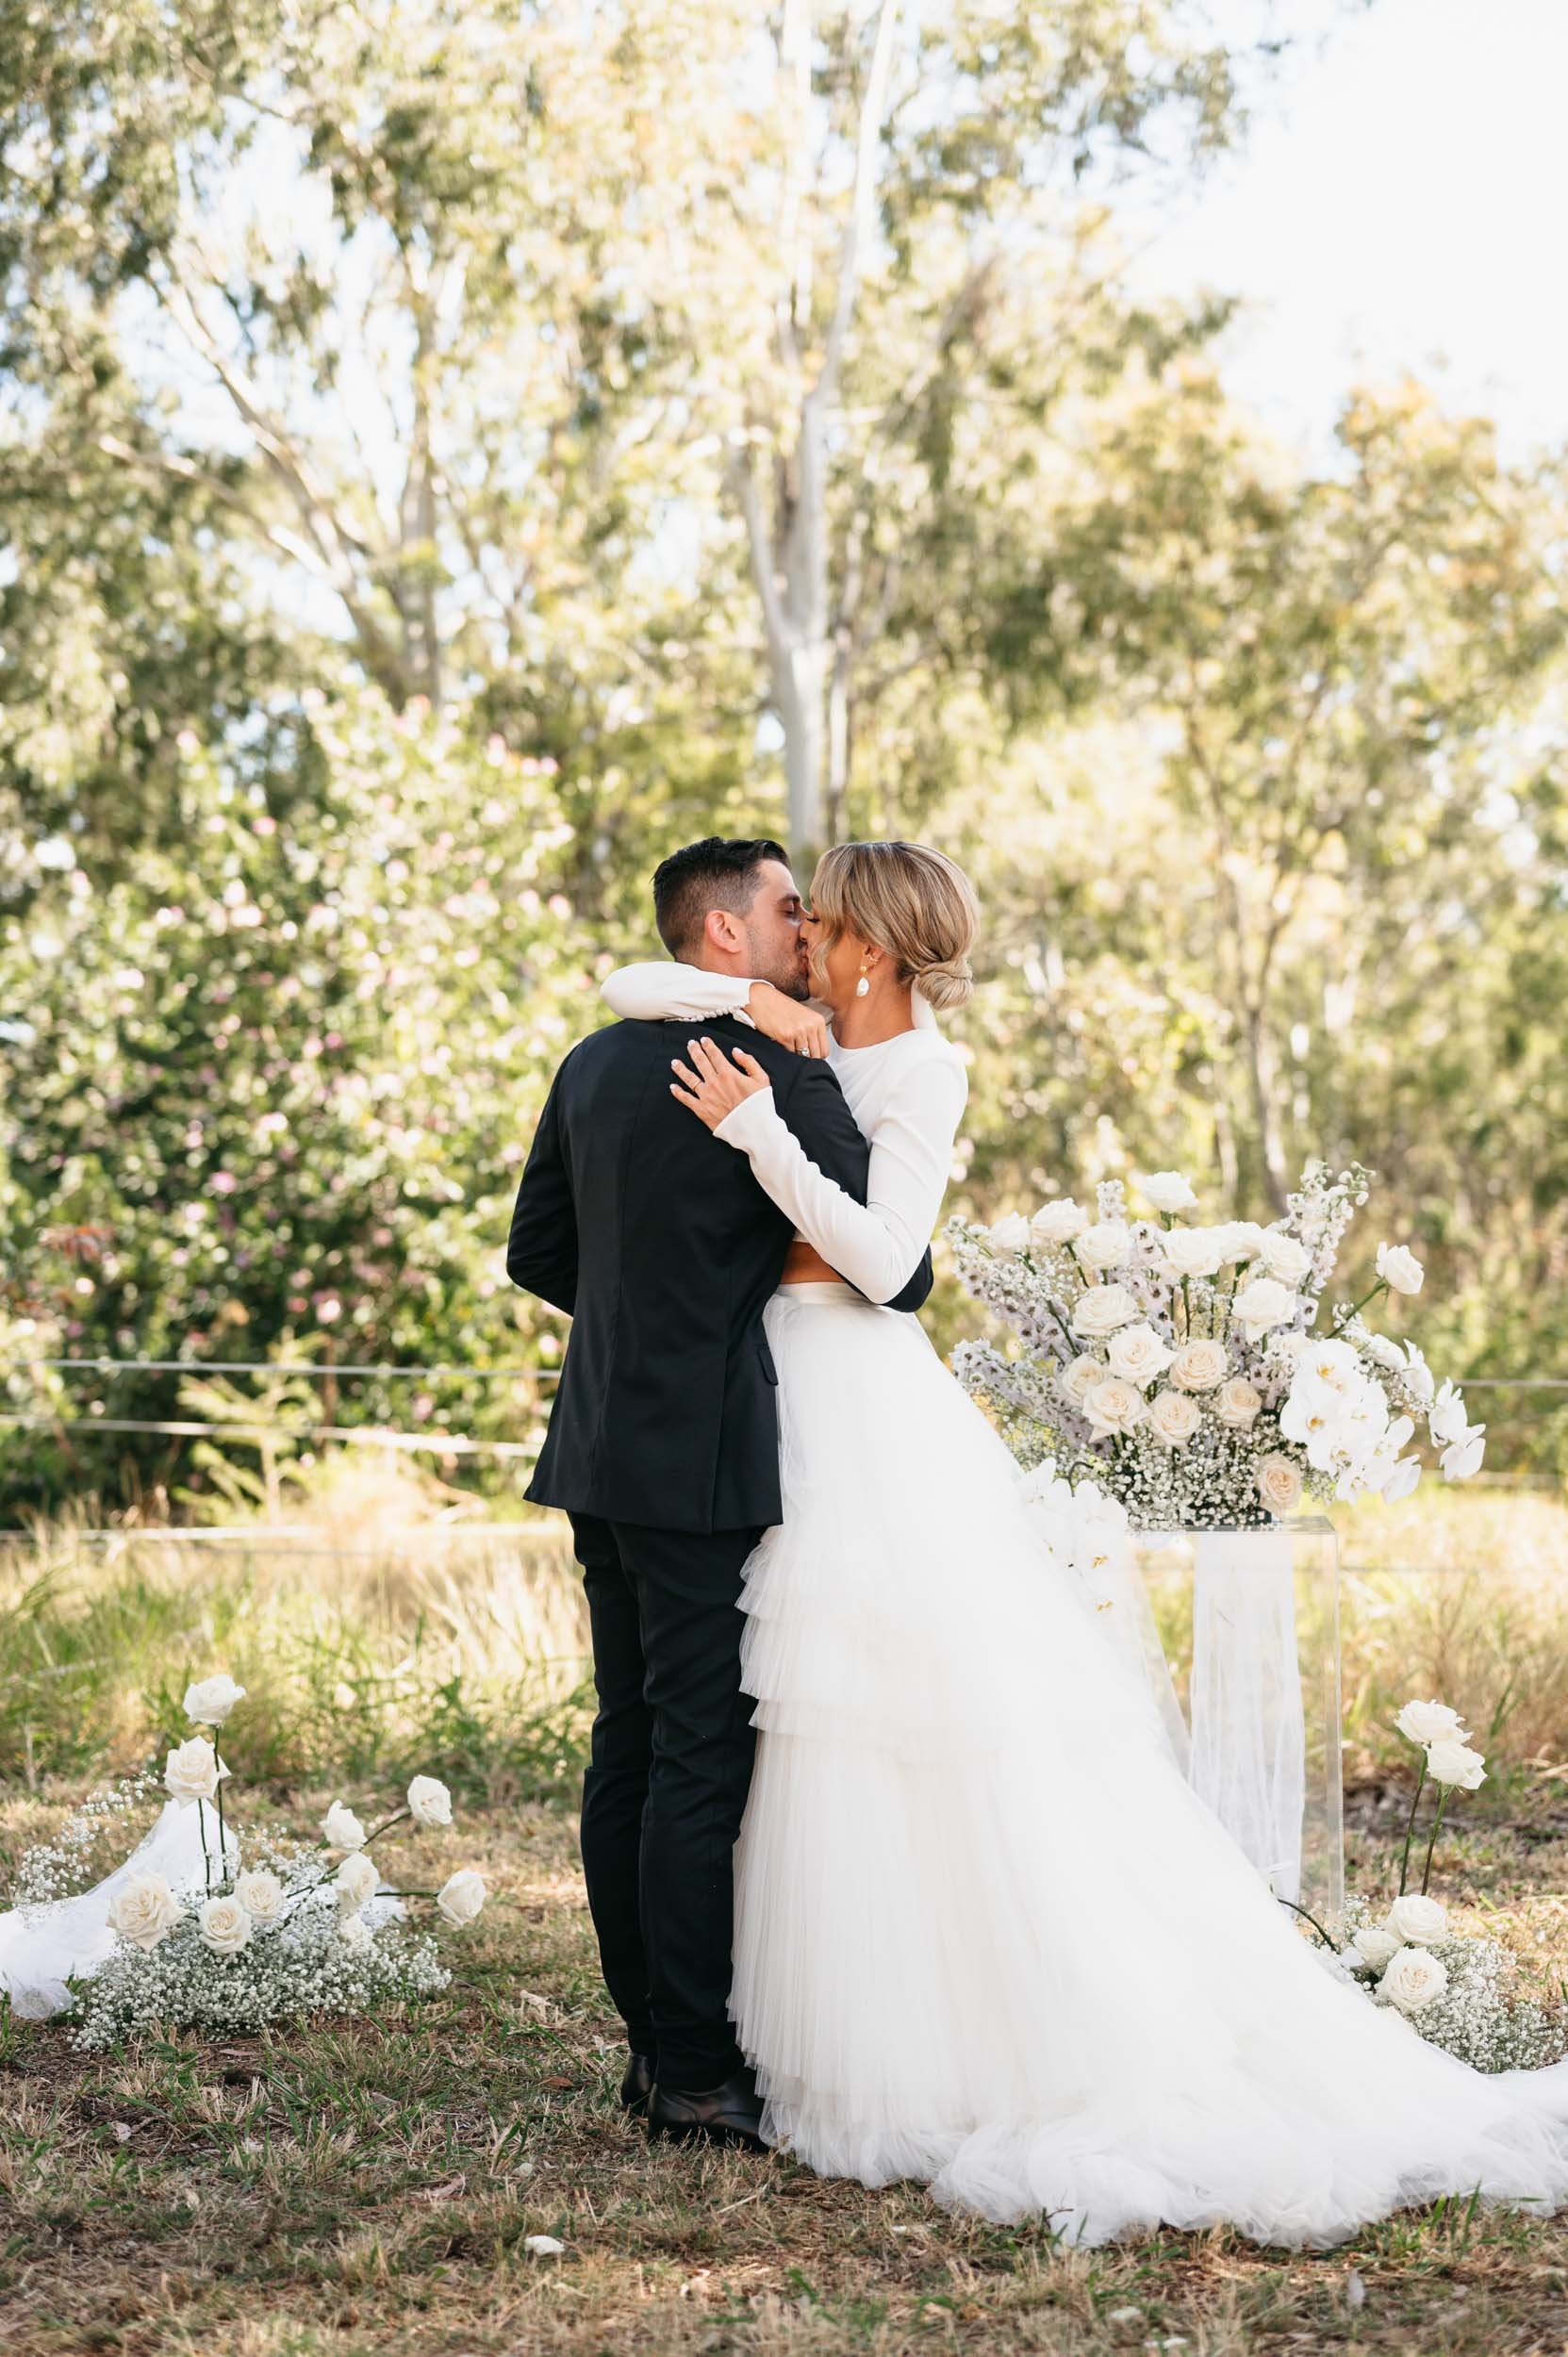 The Raw Photographer - Cairns Wedding Photographer - Mareeba Tablelands - Queensland photography - Kyha dress - luxury-32.jpg